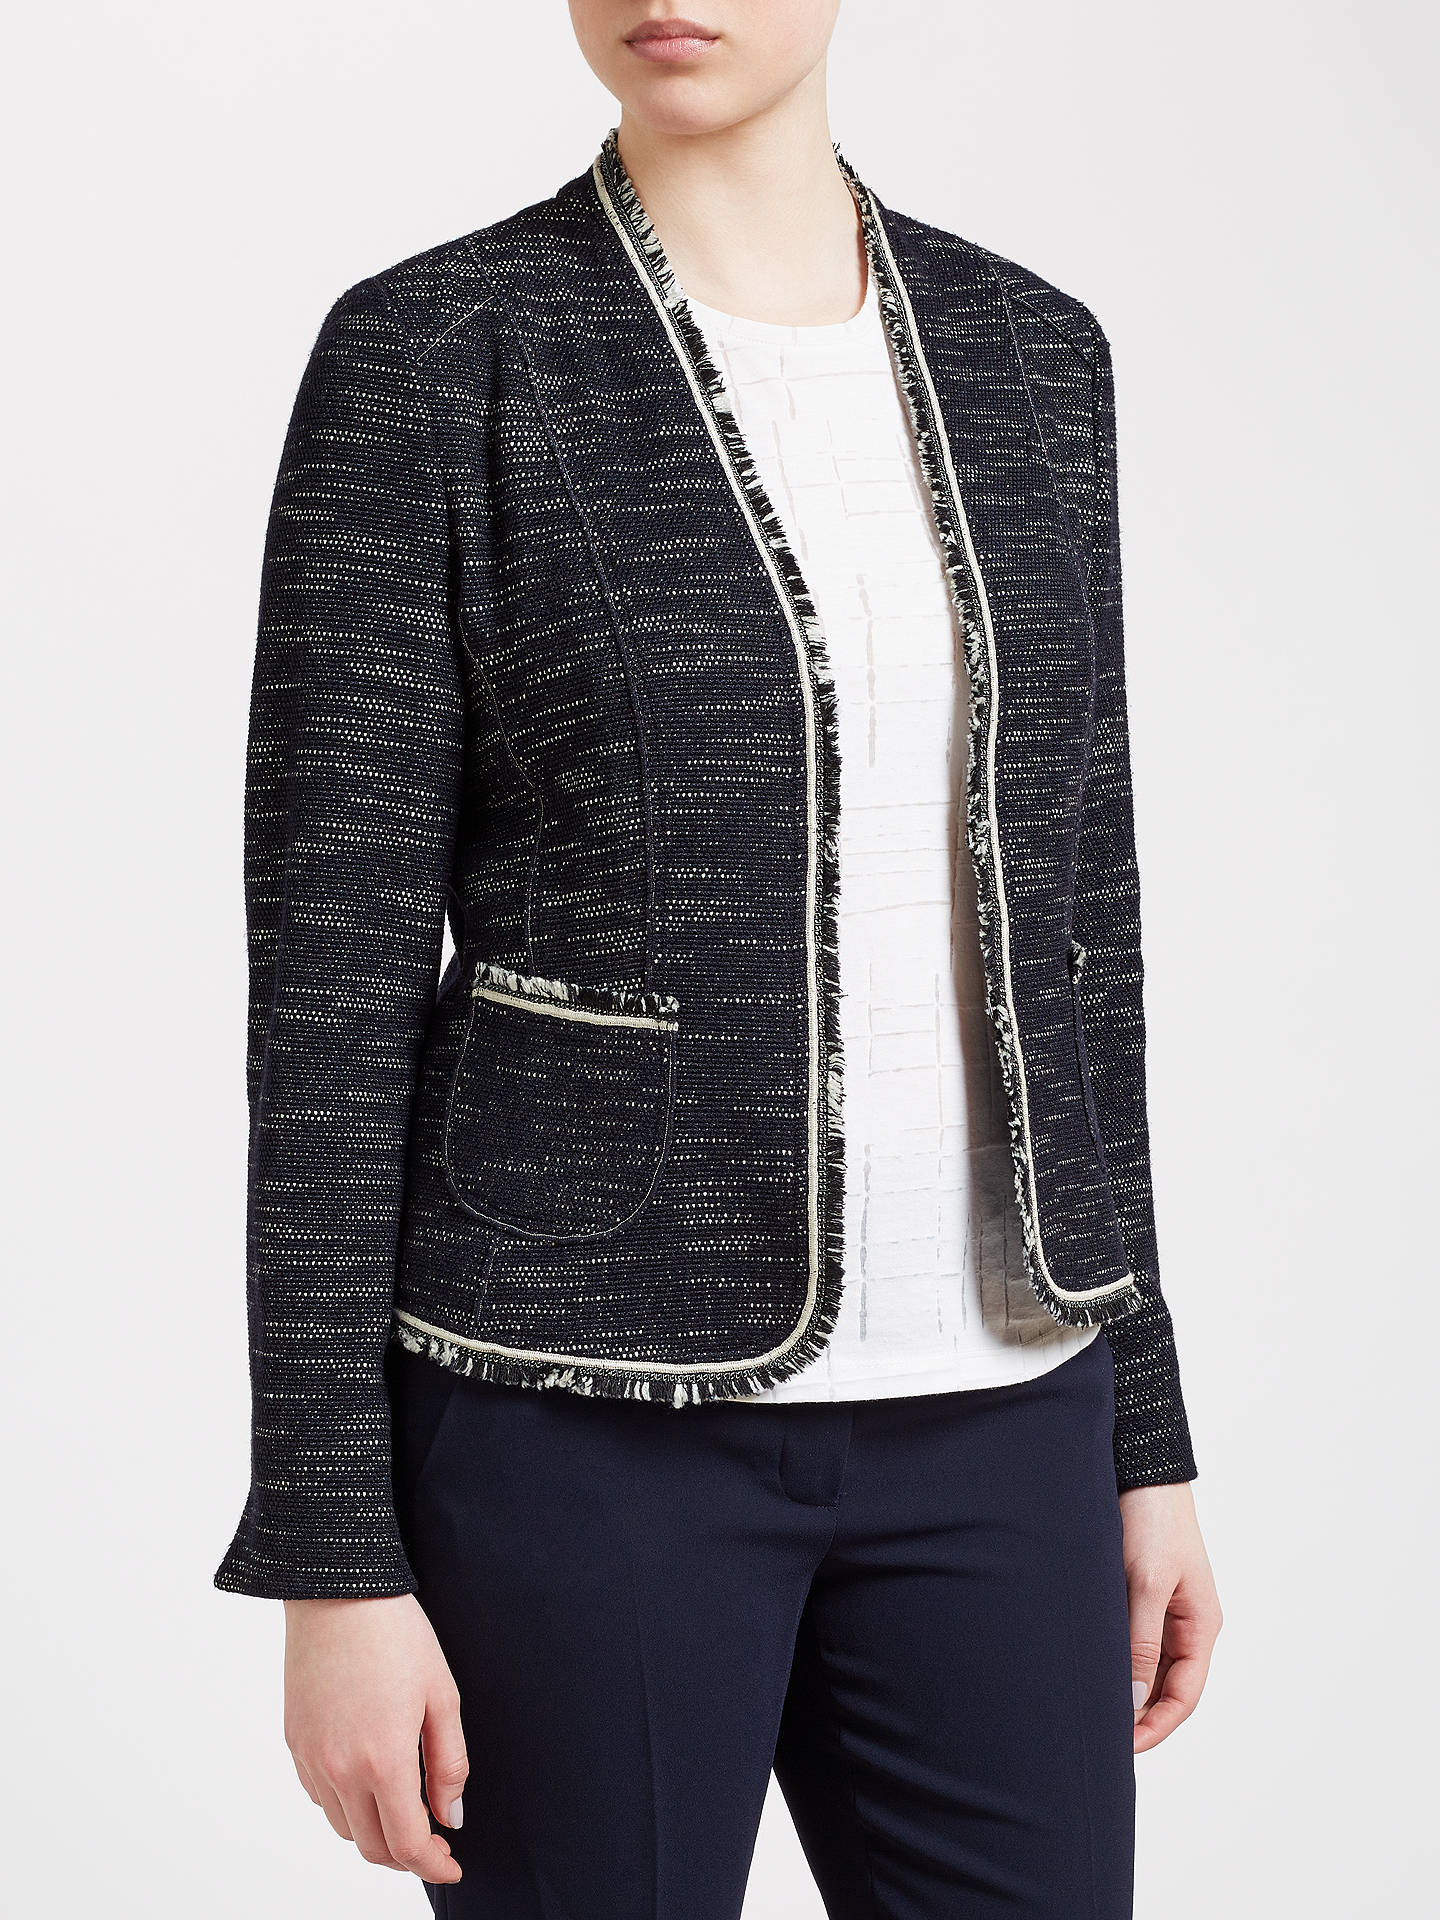 Gerry Weber Edge To Edge Textured Jacket, Indigo at John Lewis & Partners